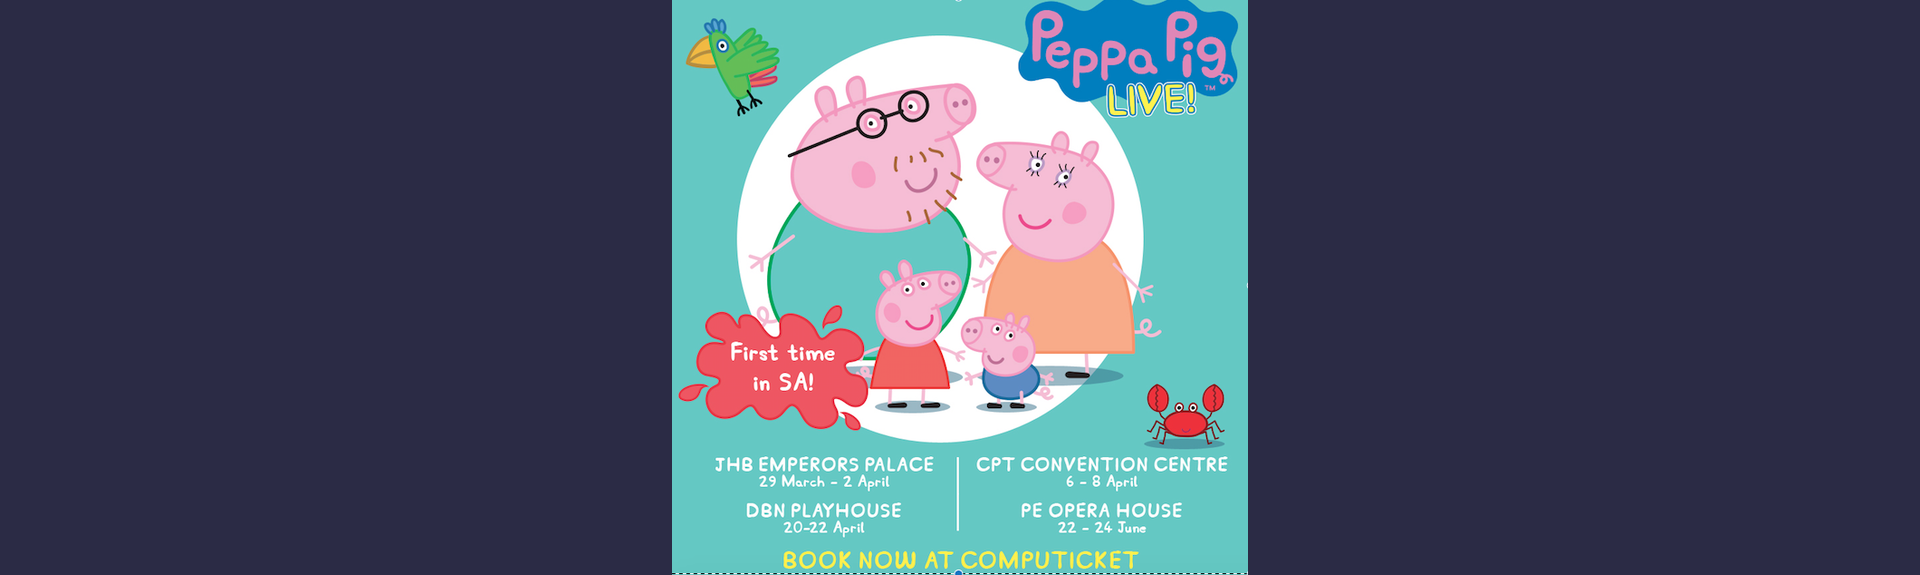 Peppa Pig - Show - Cape Town 